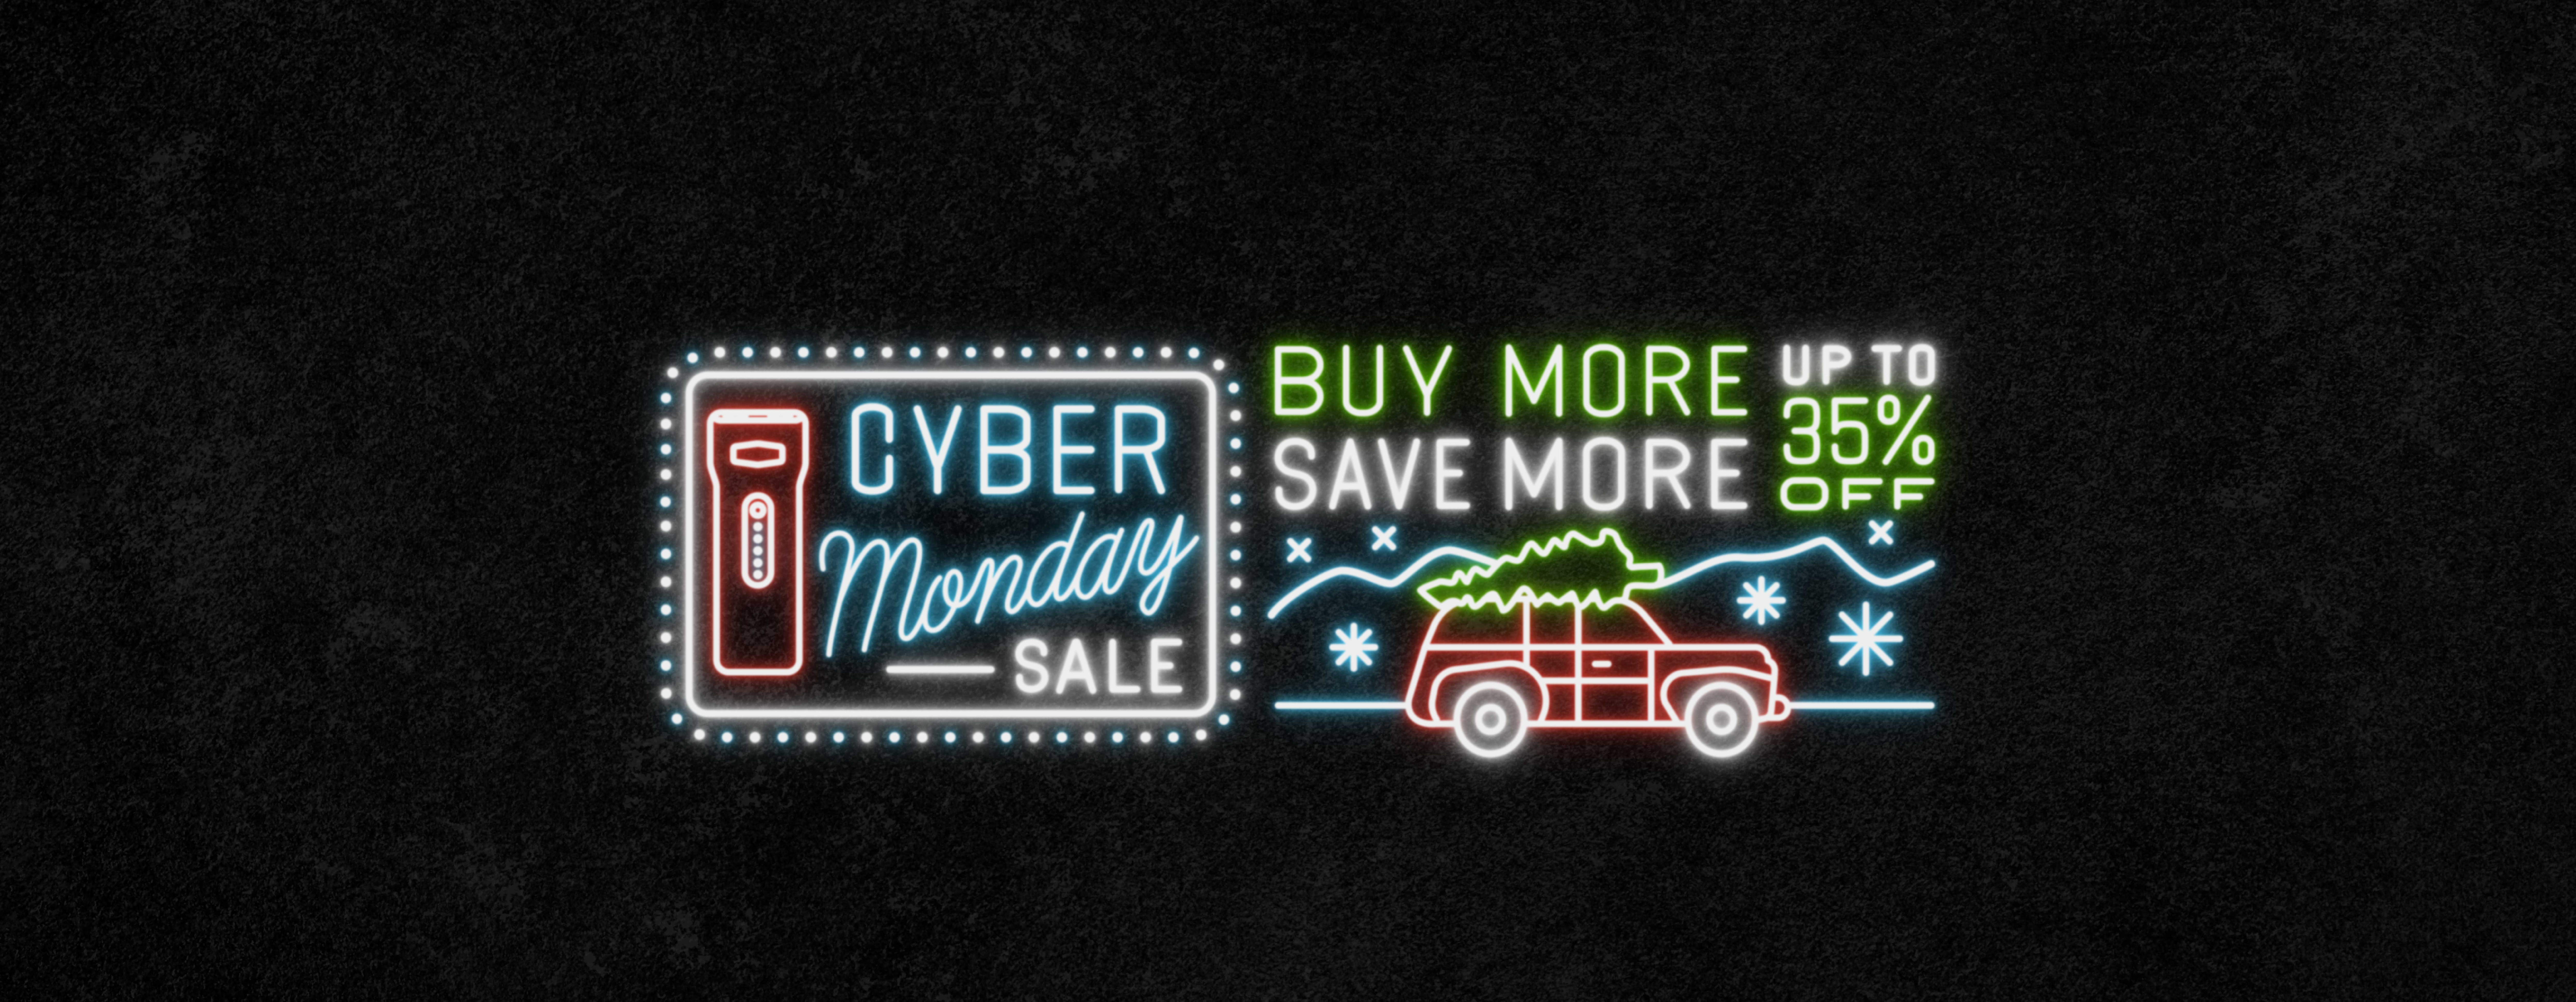 Weego Cyber Monday Sale